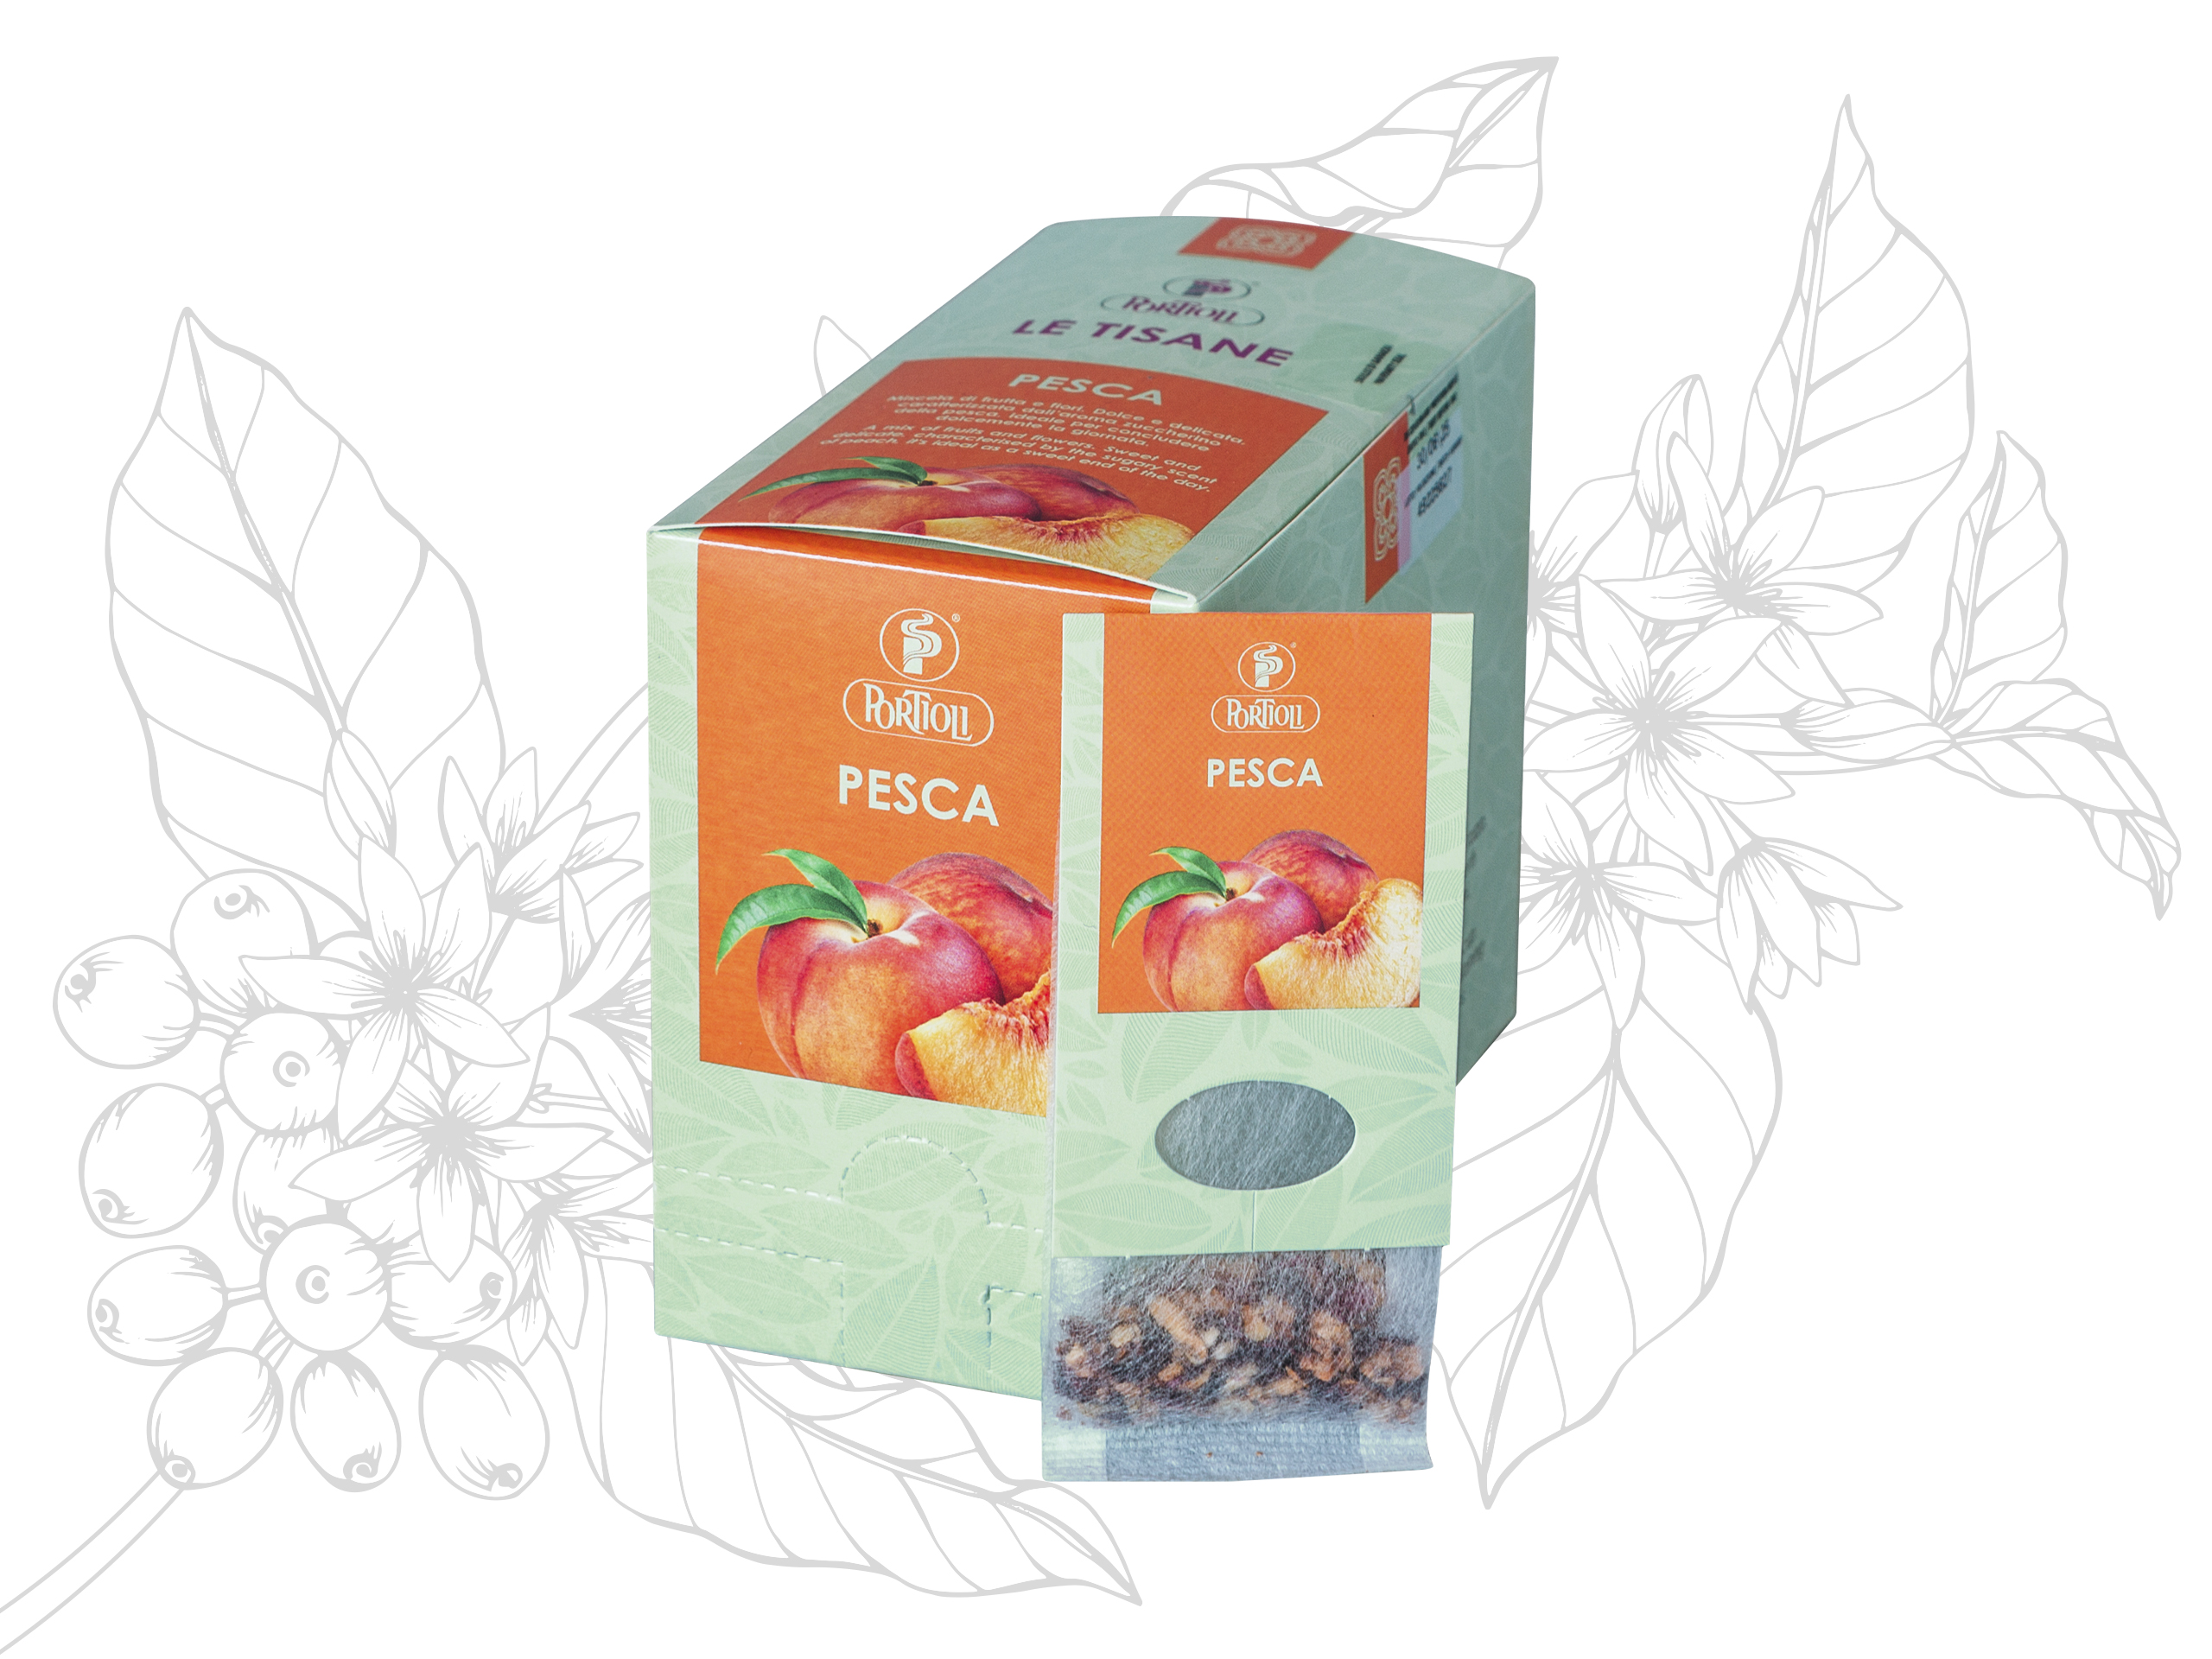 Portioli Pesca Herbal Tea